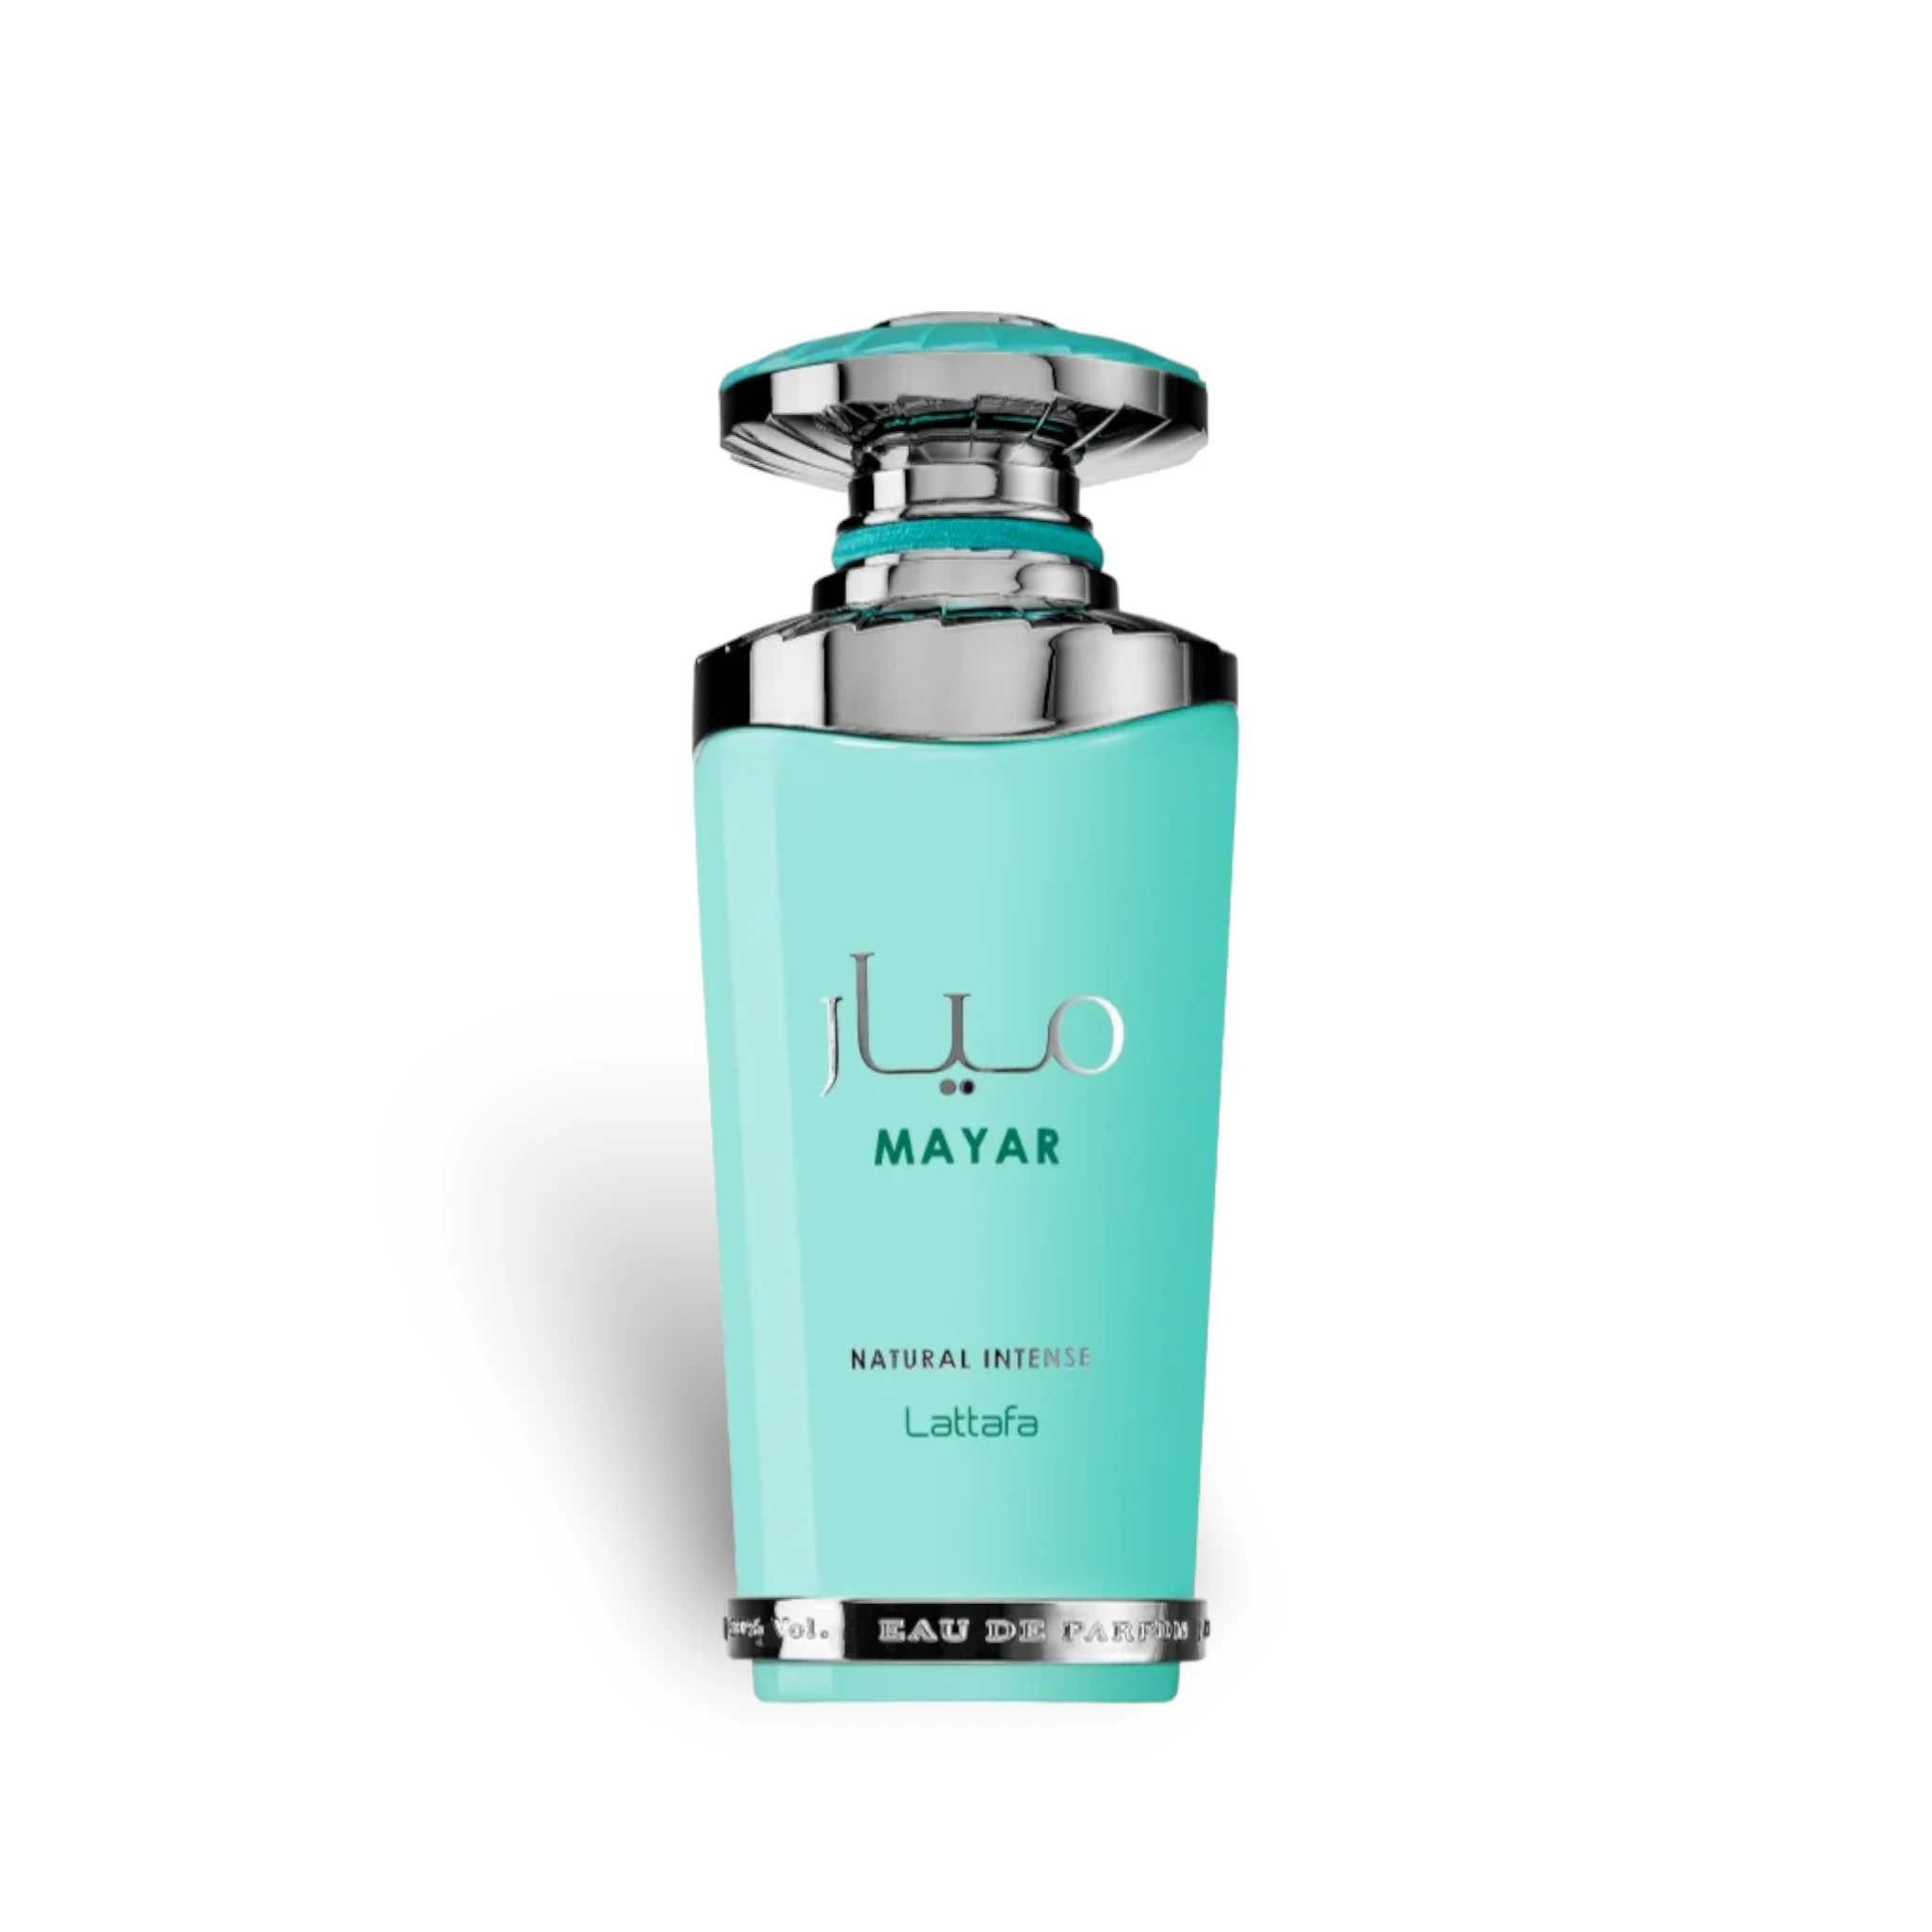 Mayar Natural Intense Perfume Eau De Perfume 100Ml By Lattafa Perfumes